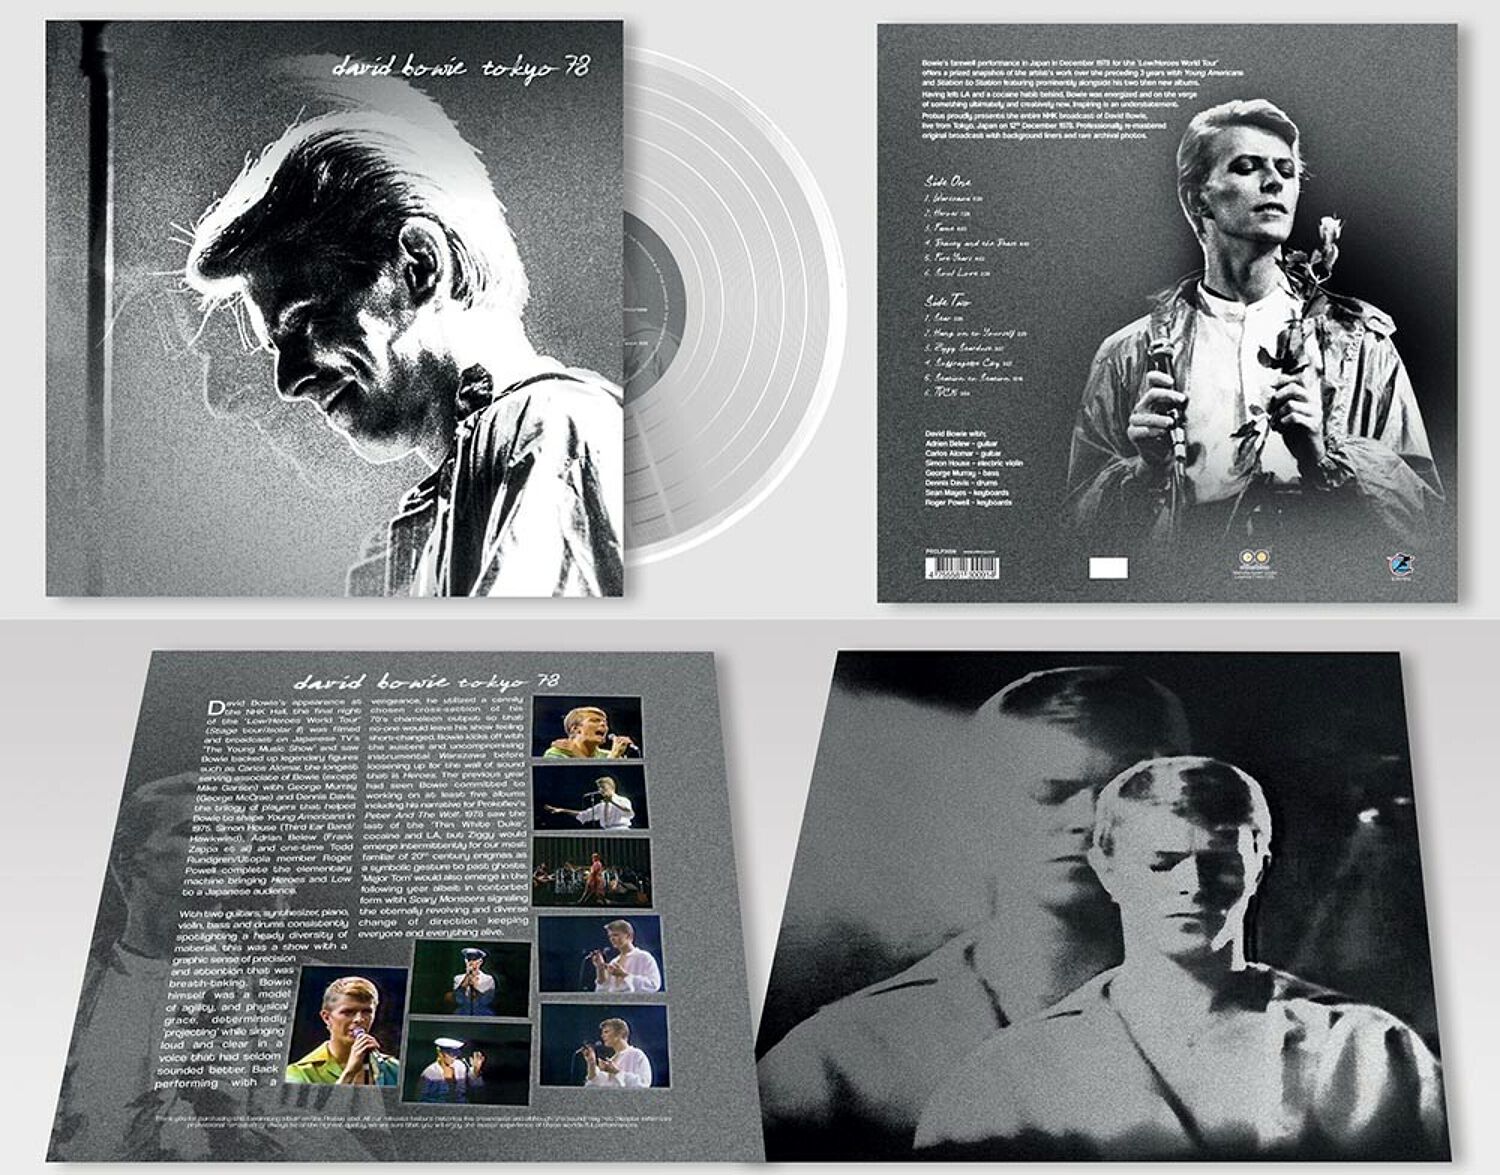 David Bowie Toyko1978 LP white